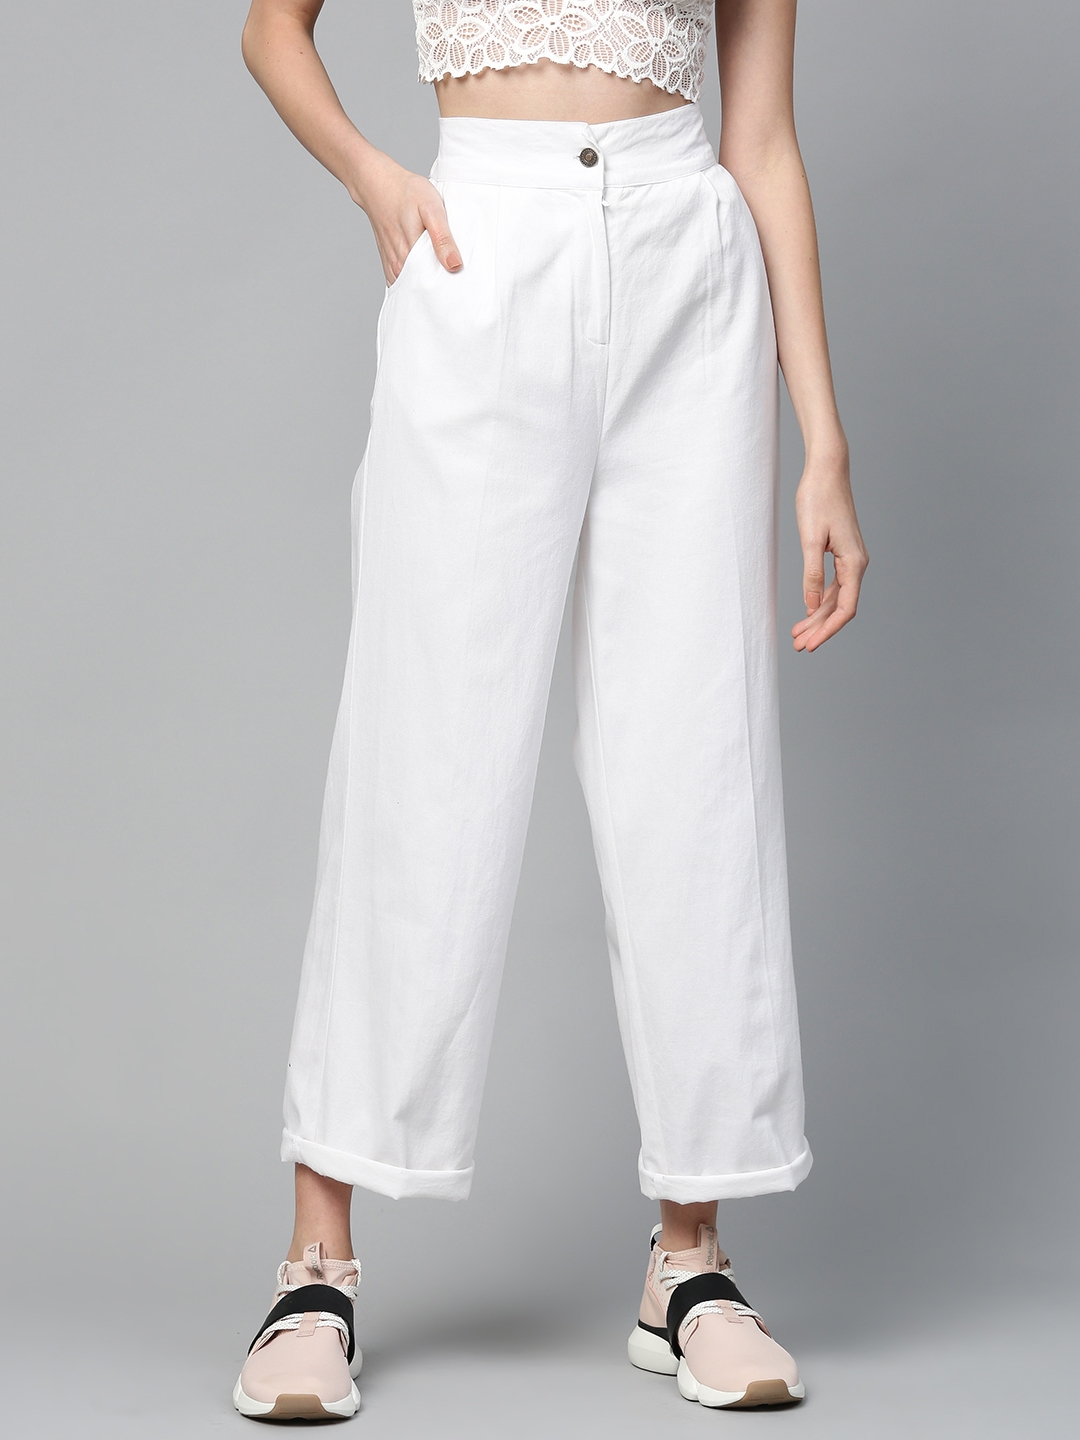 Preserve more than 157 white pants for women